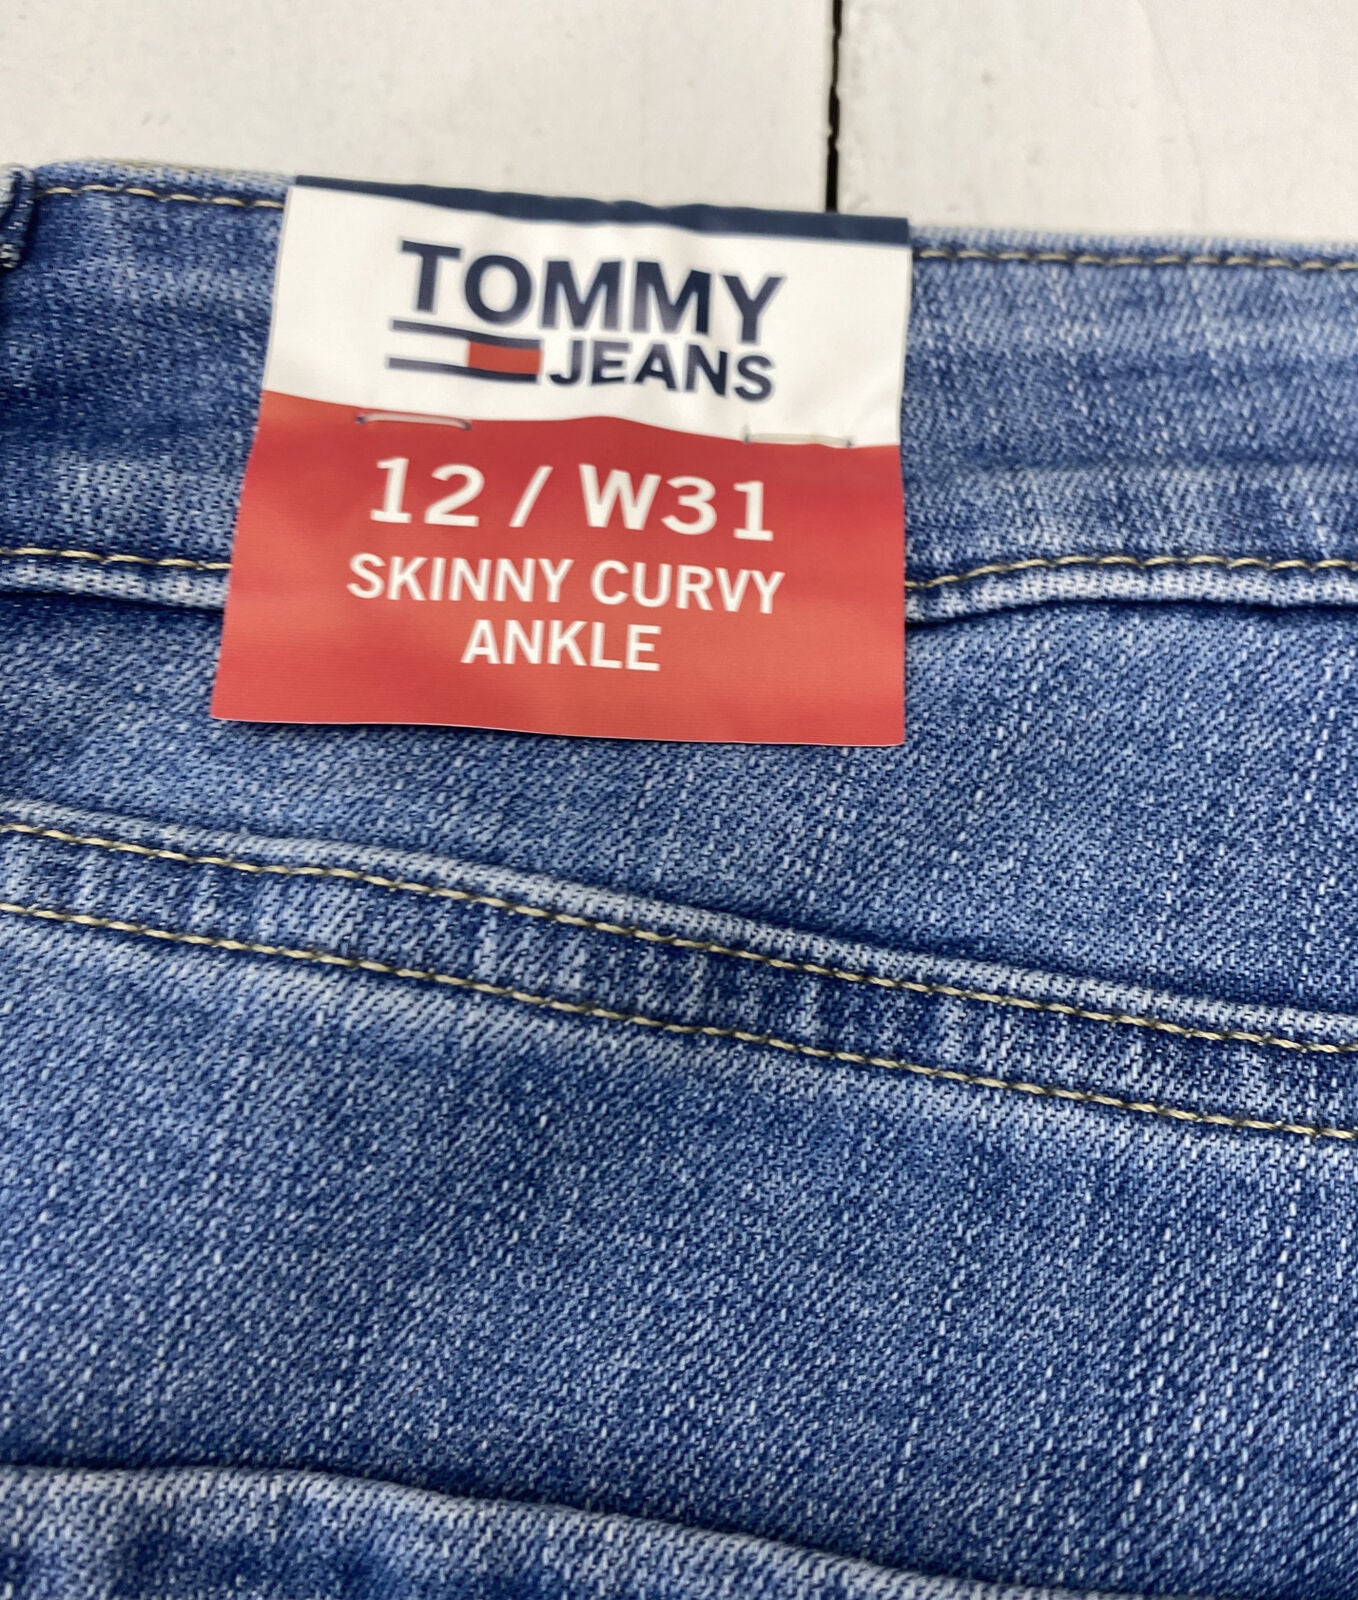 Curvy Tommy Skinny New exchange 12/31 Womens Hilfiger - TOBKOFZC Ankle Jean Size beyond